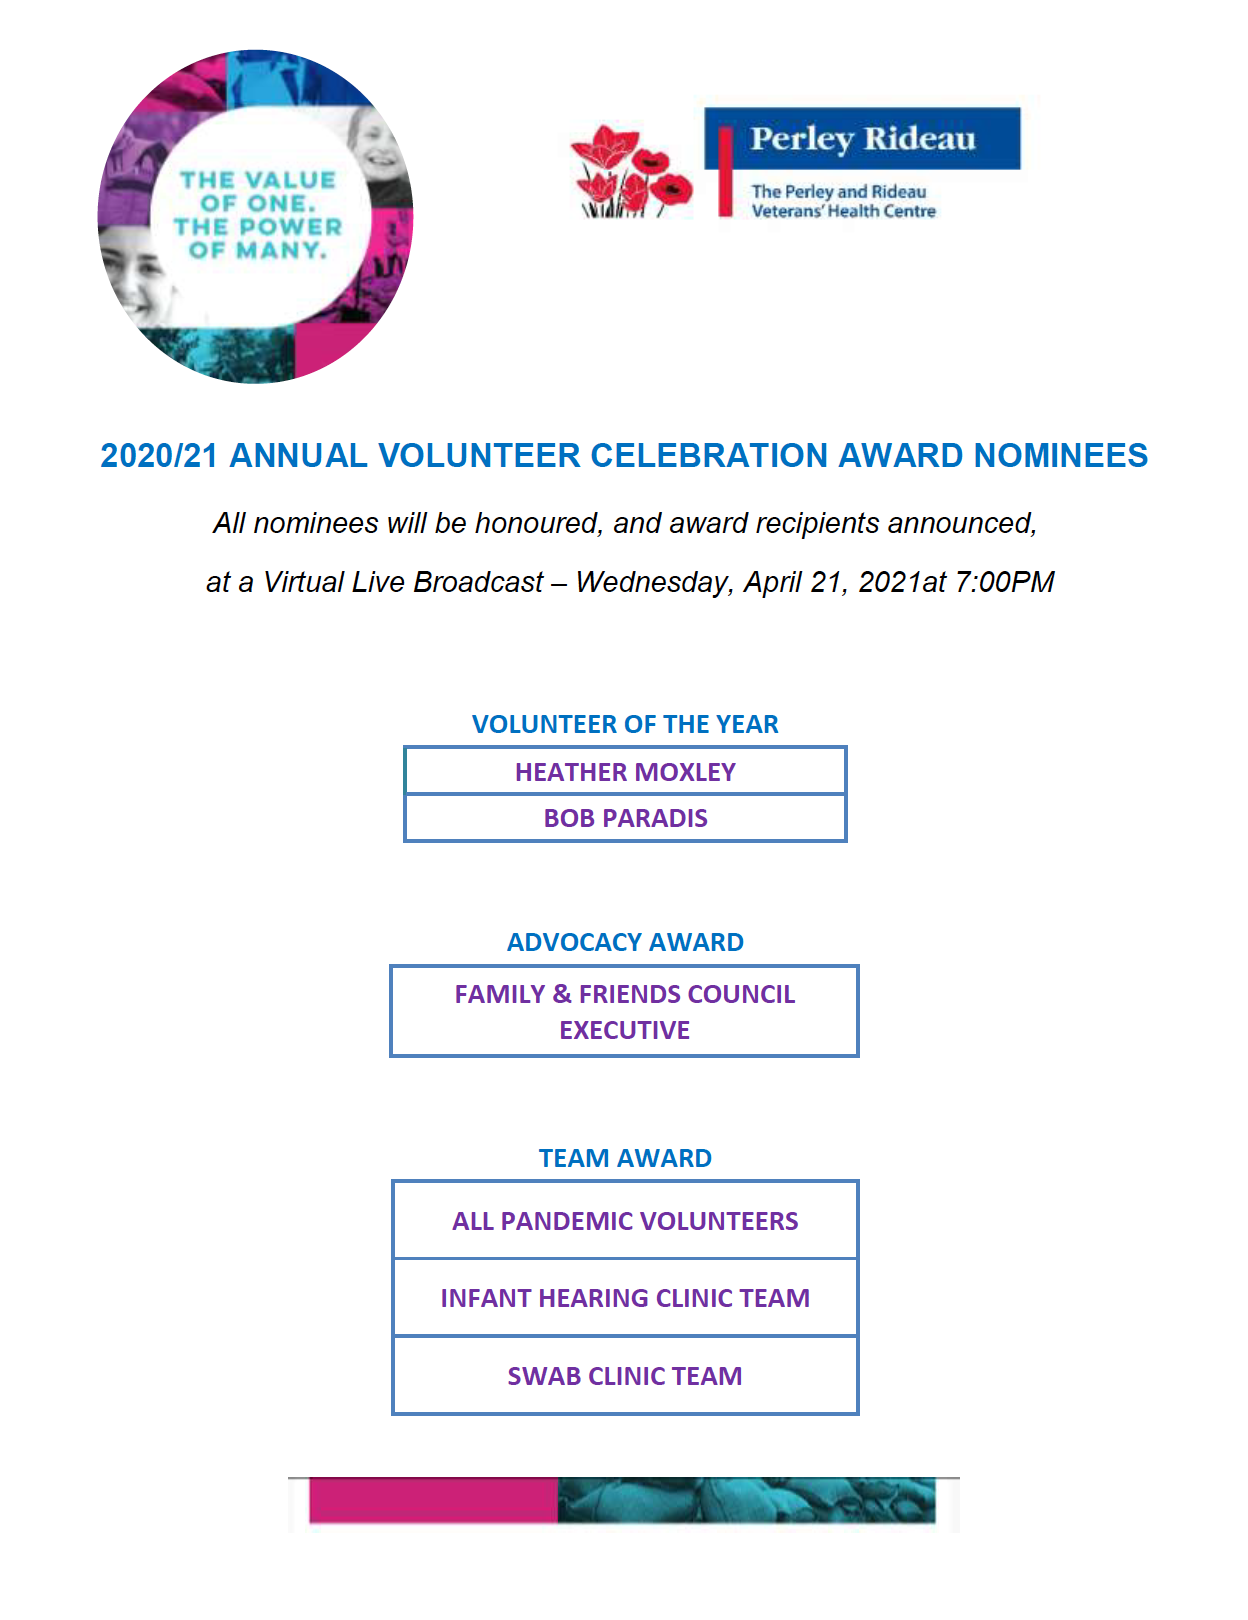 2020 / 2021 Annual Volunteer Celebration Award Nominees Poster